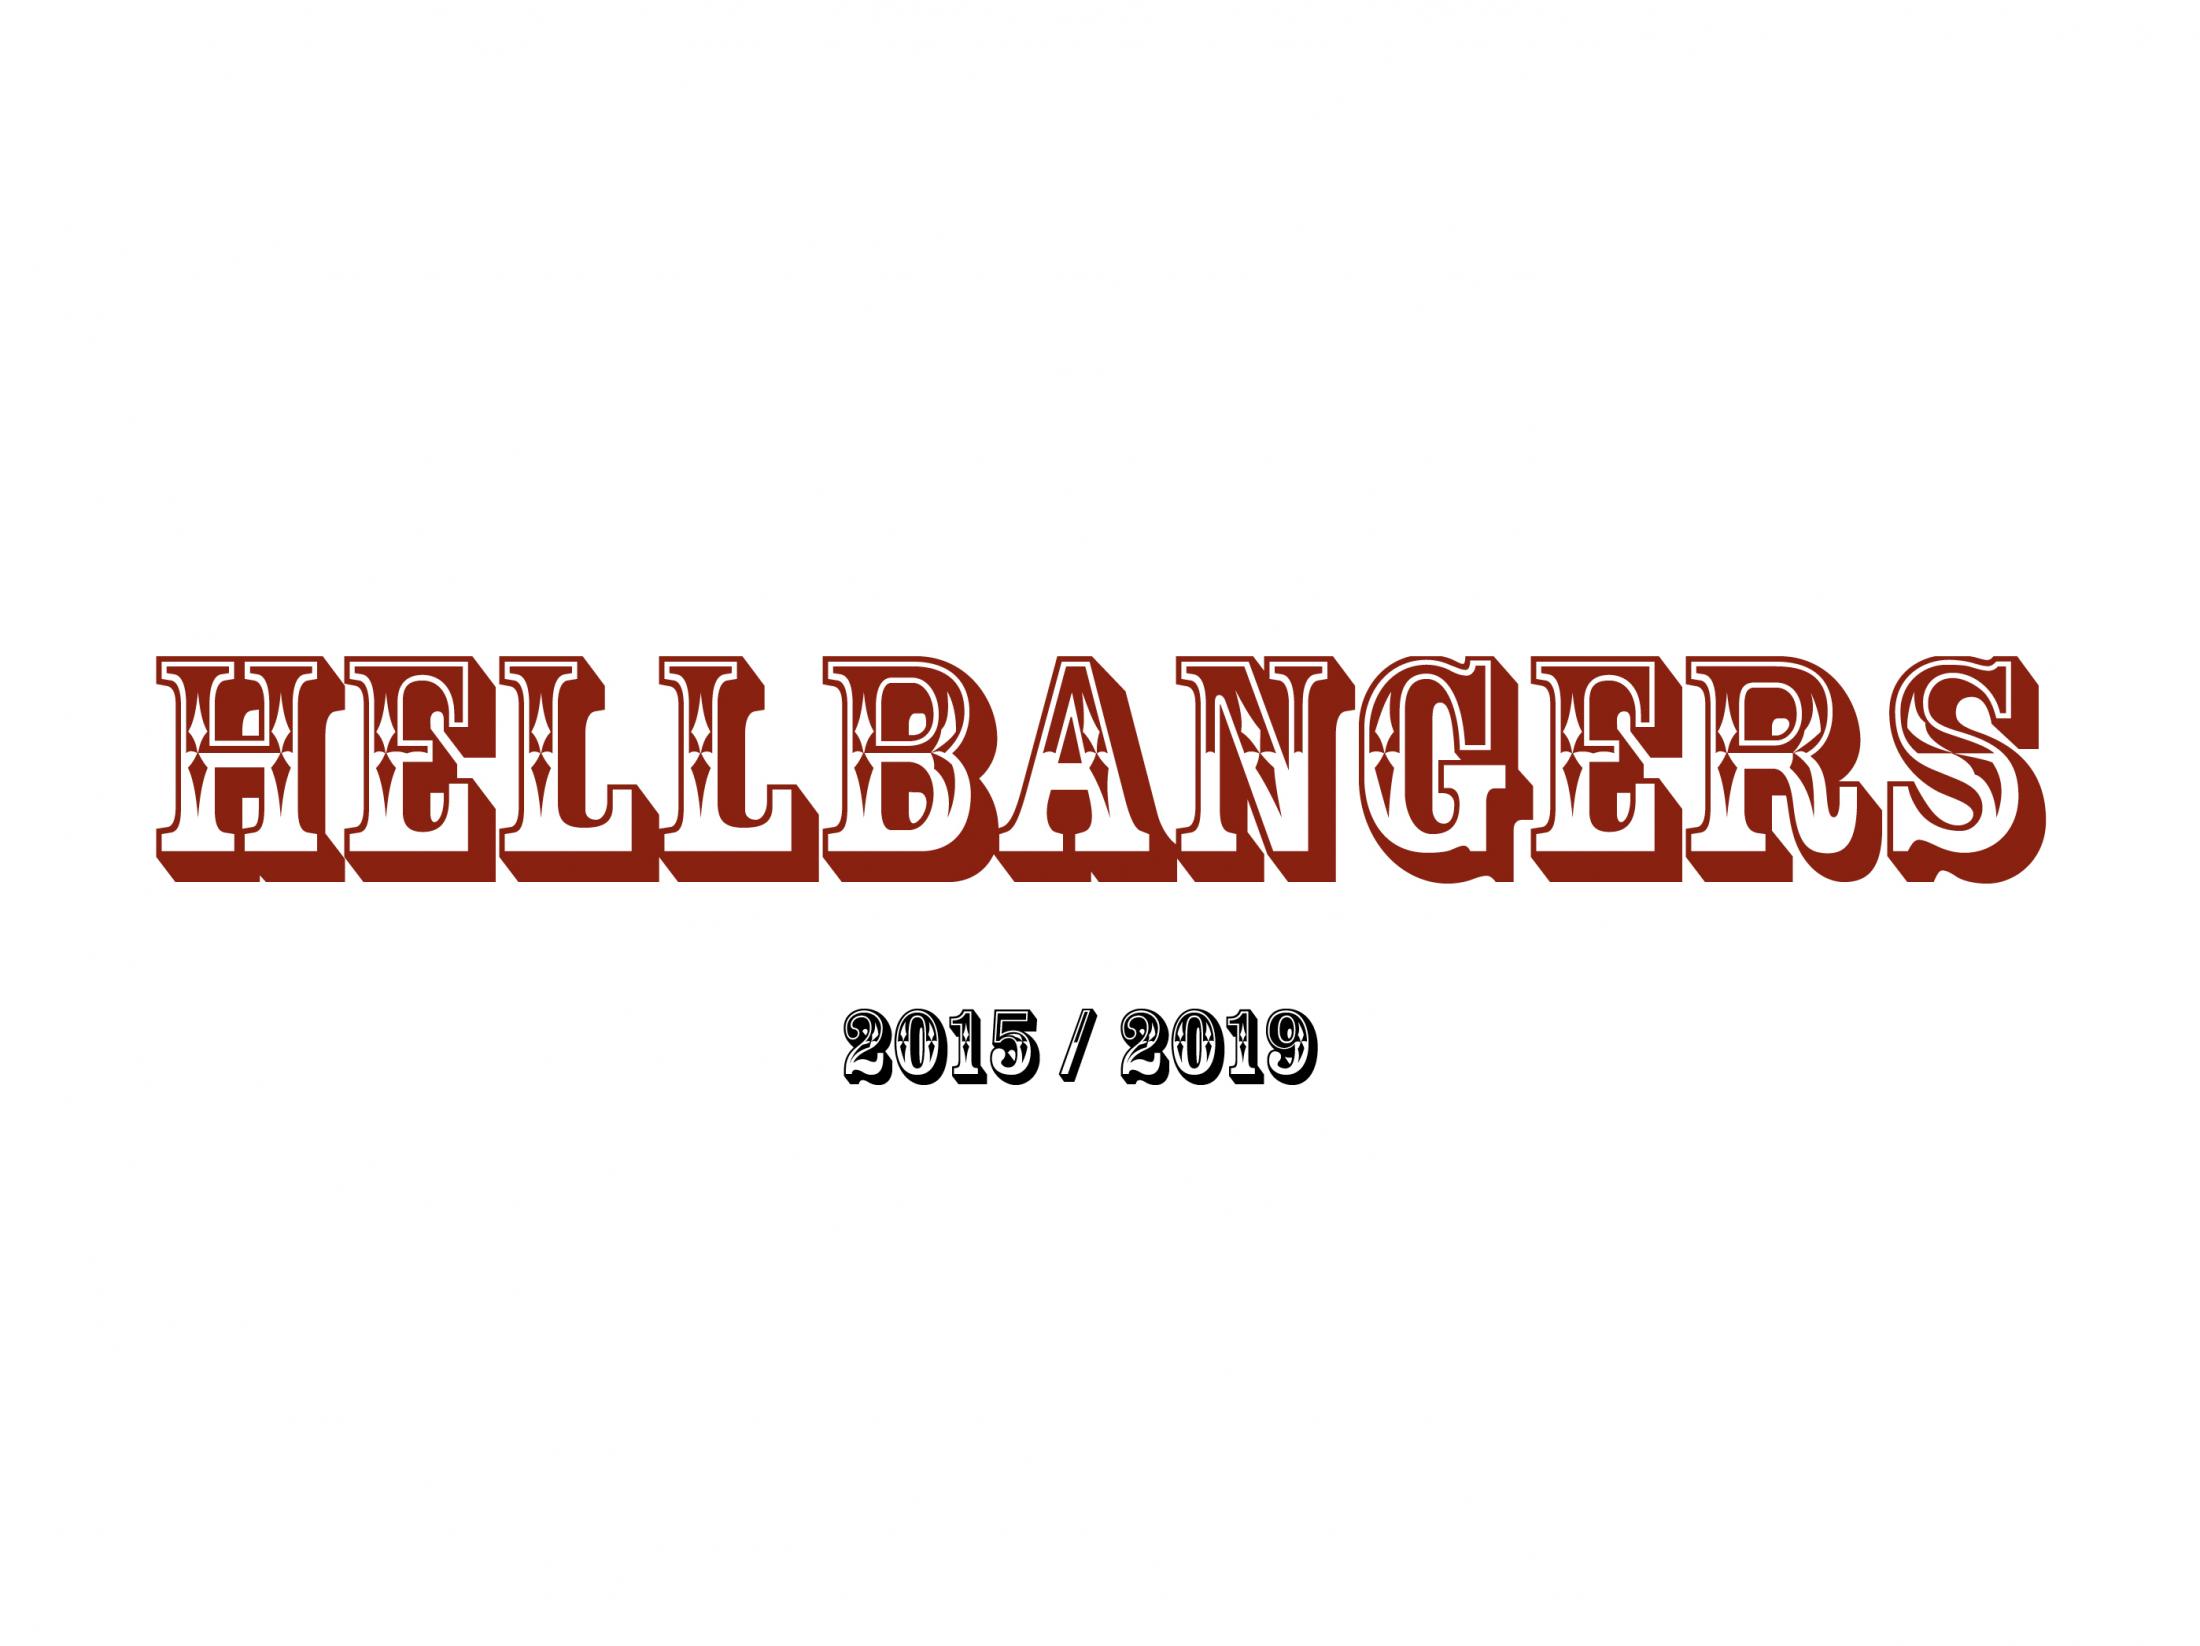 Hellbangers - 